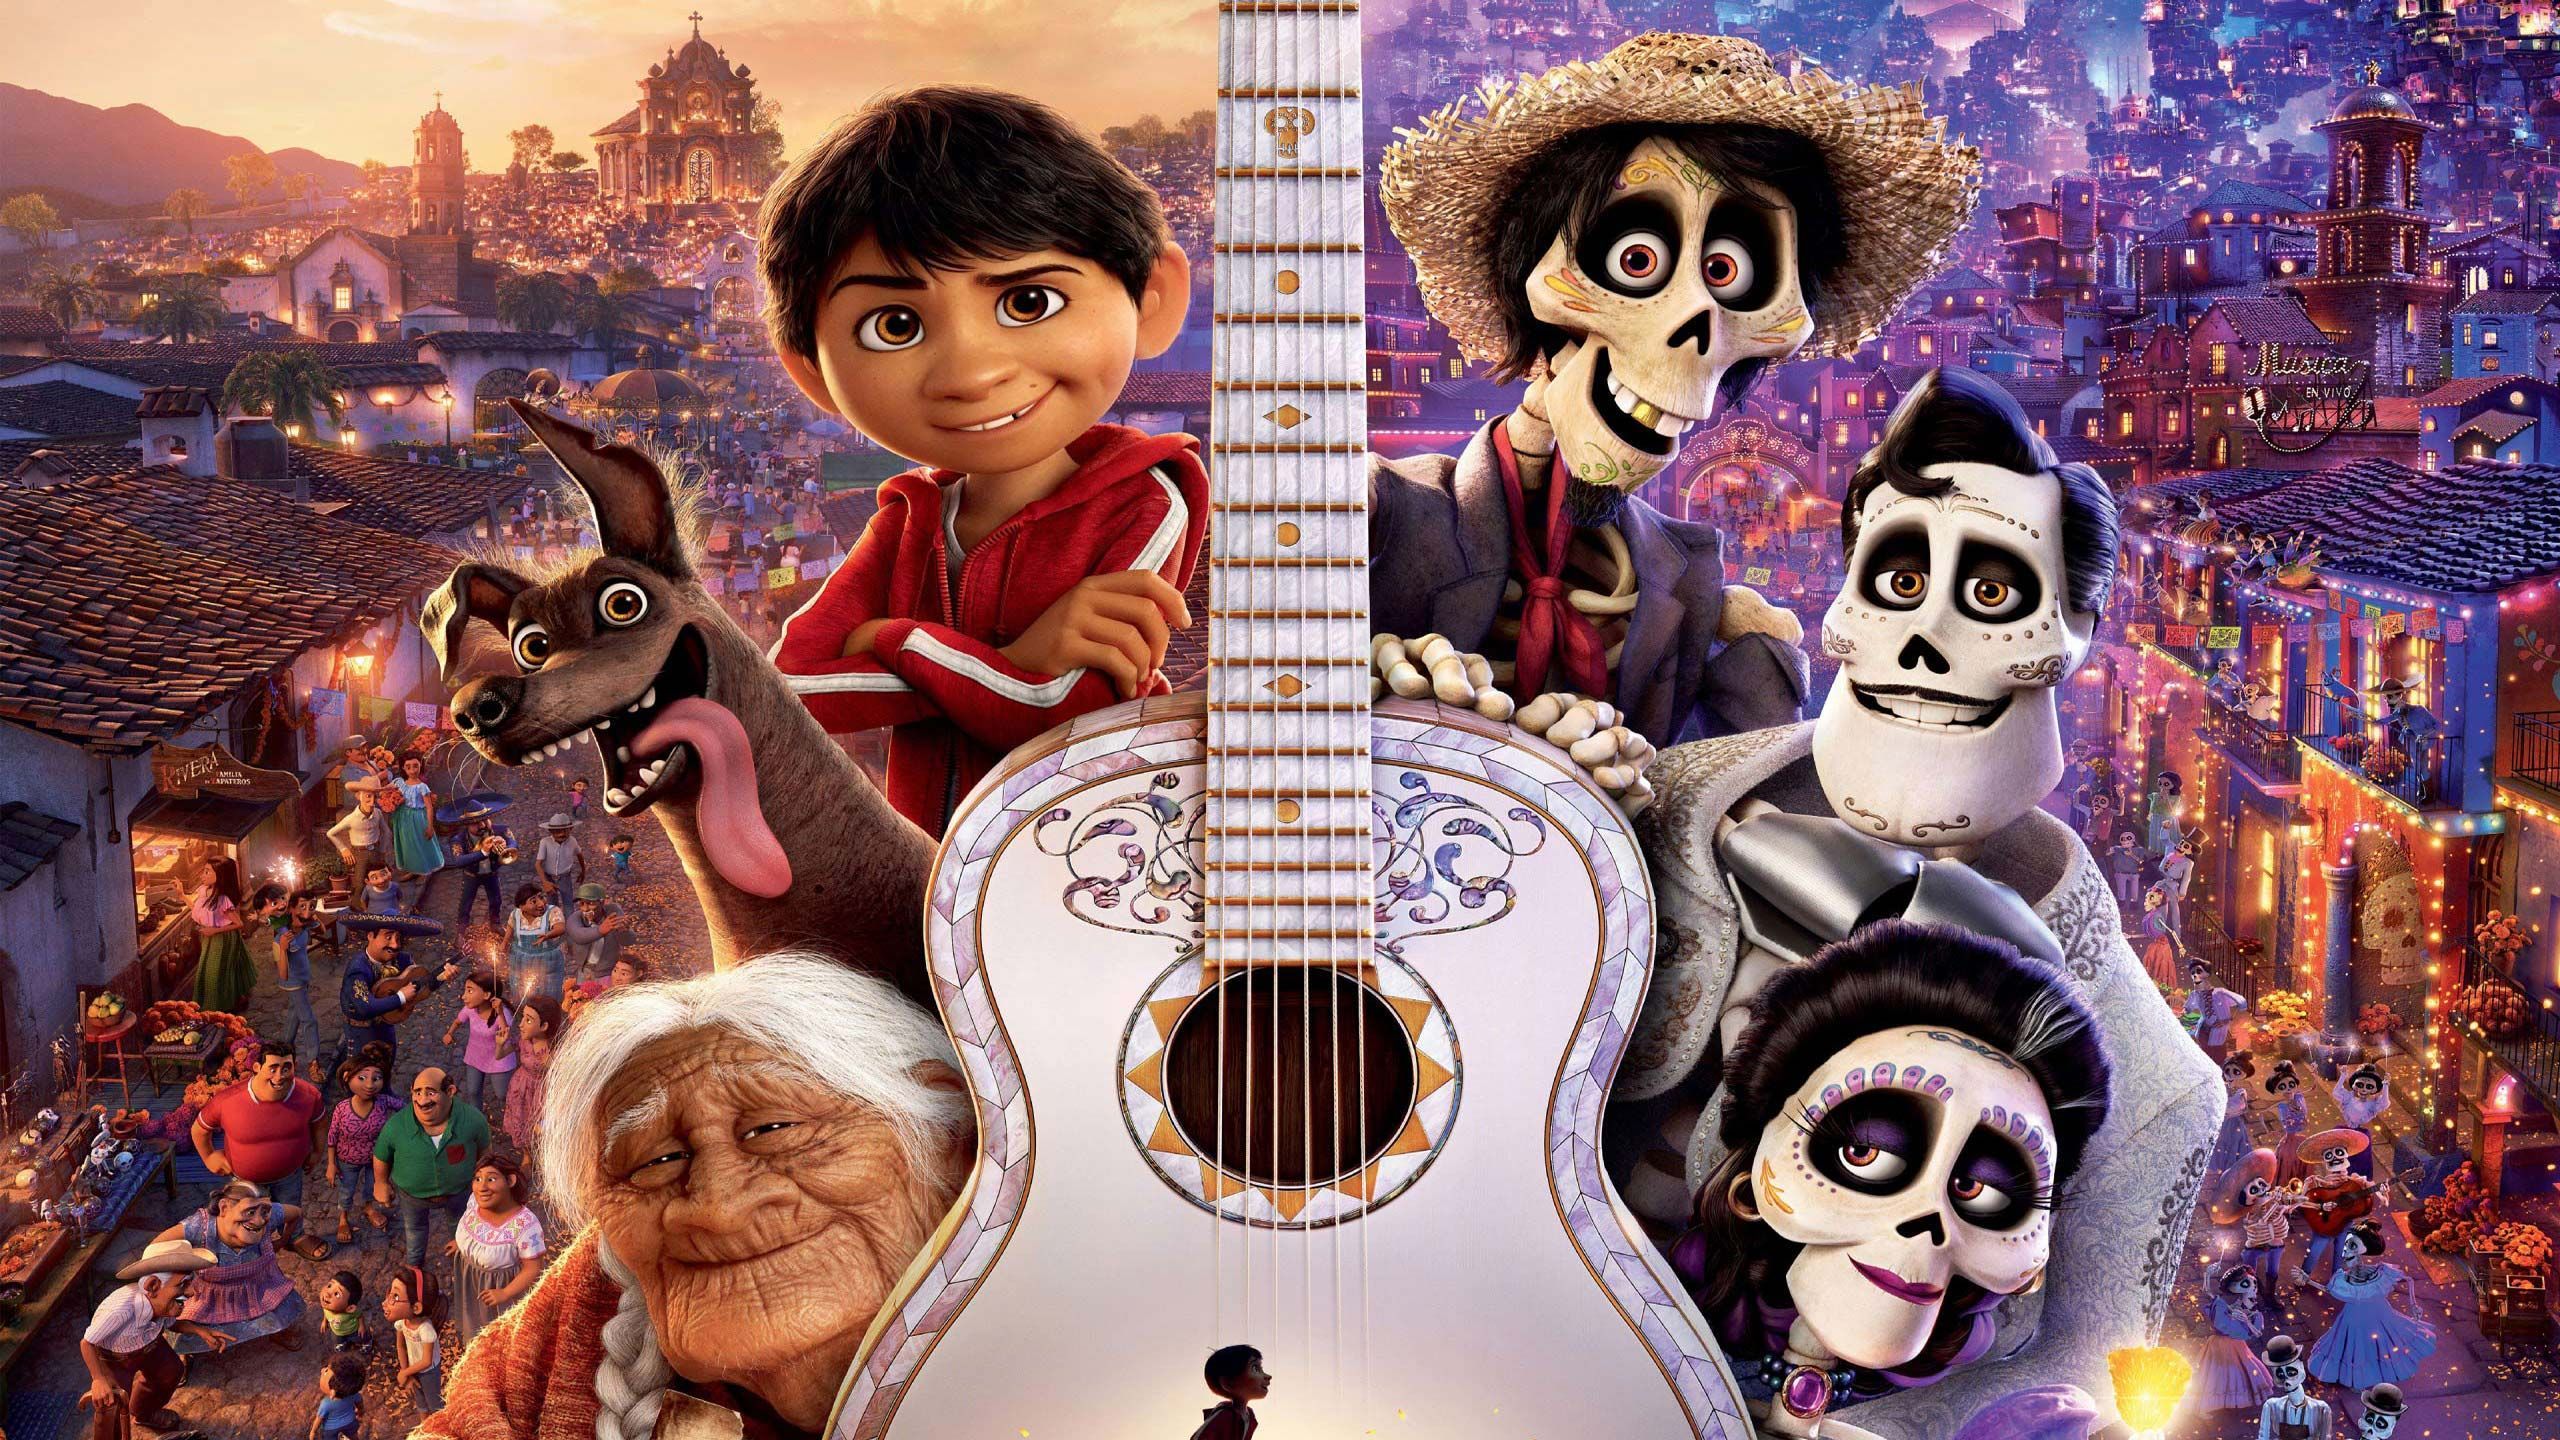 Free Coco Pixar Movie, computer desktop wallpaper, picture, image. Animated movies, Animation film, Pixar